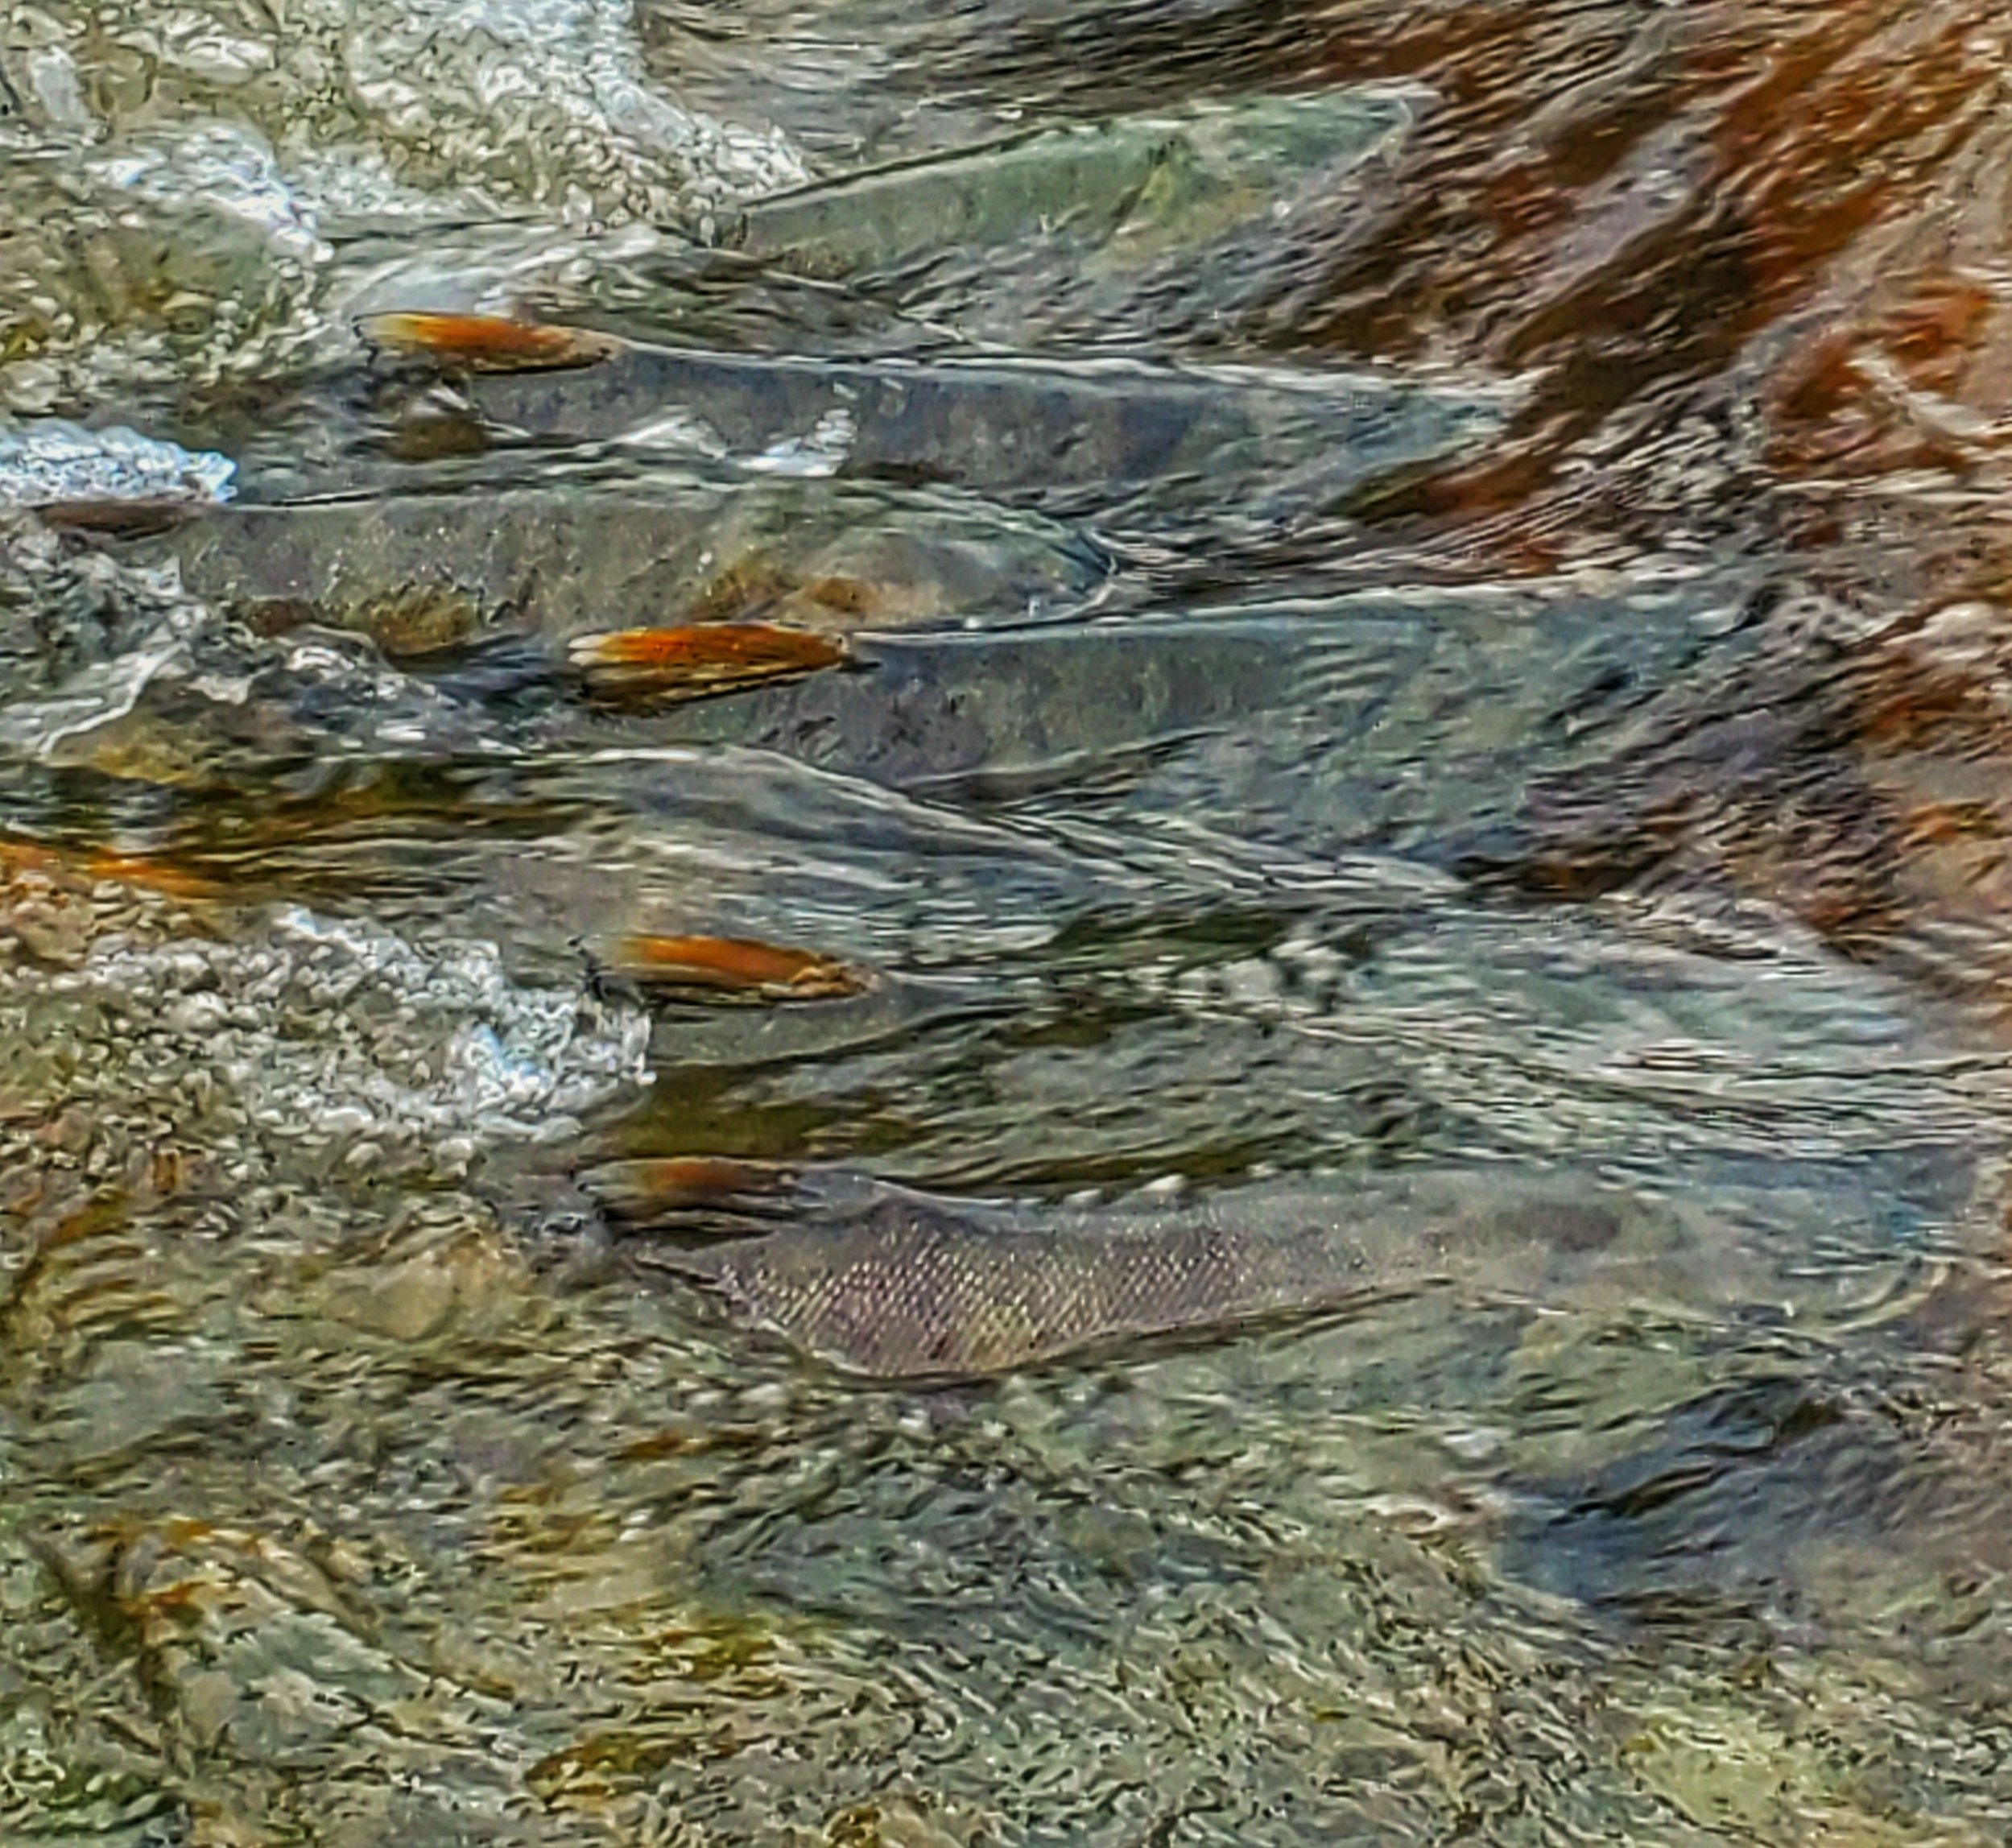 Adult chum salmon returning to Chico Creek